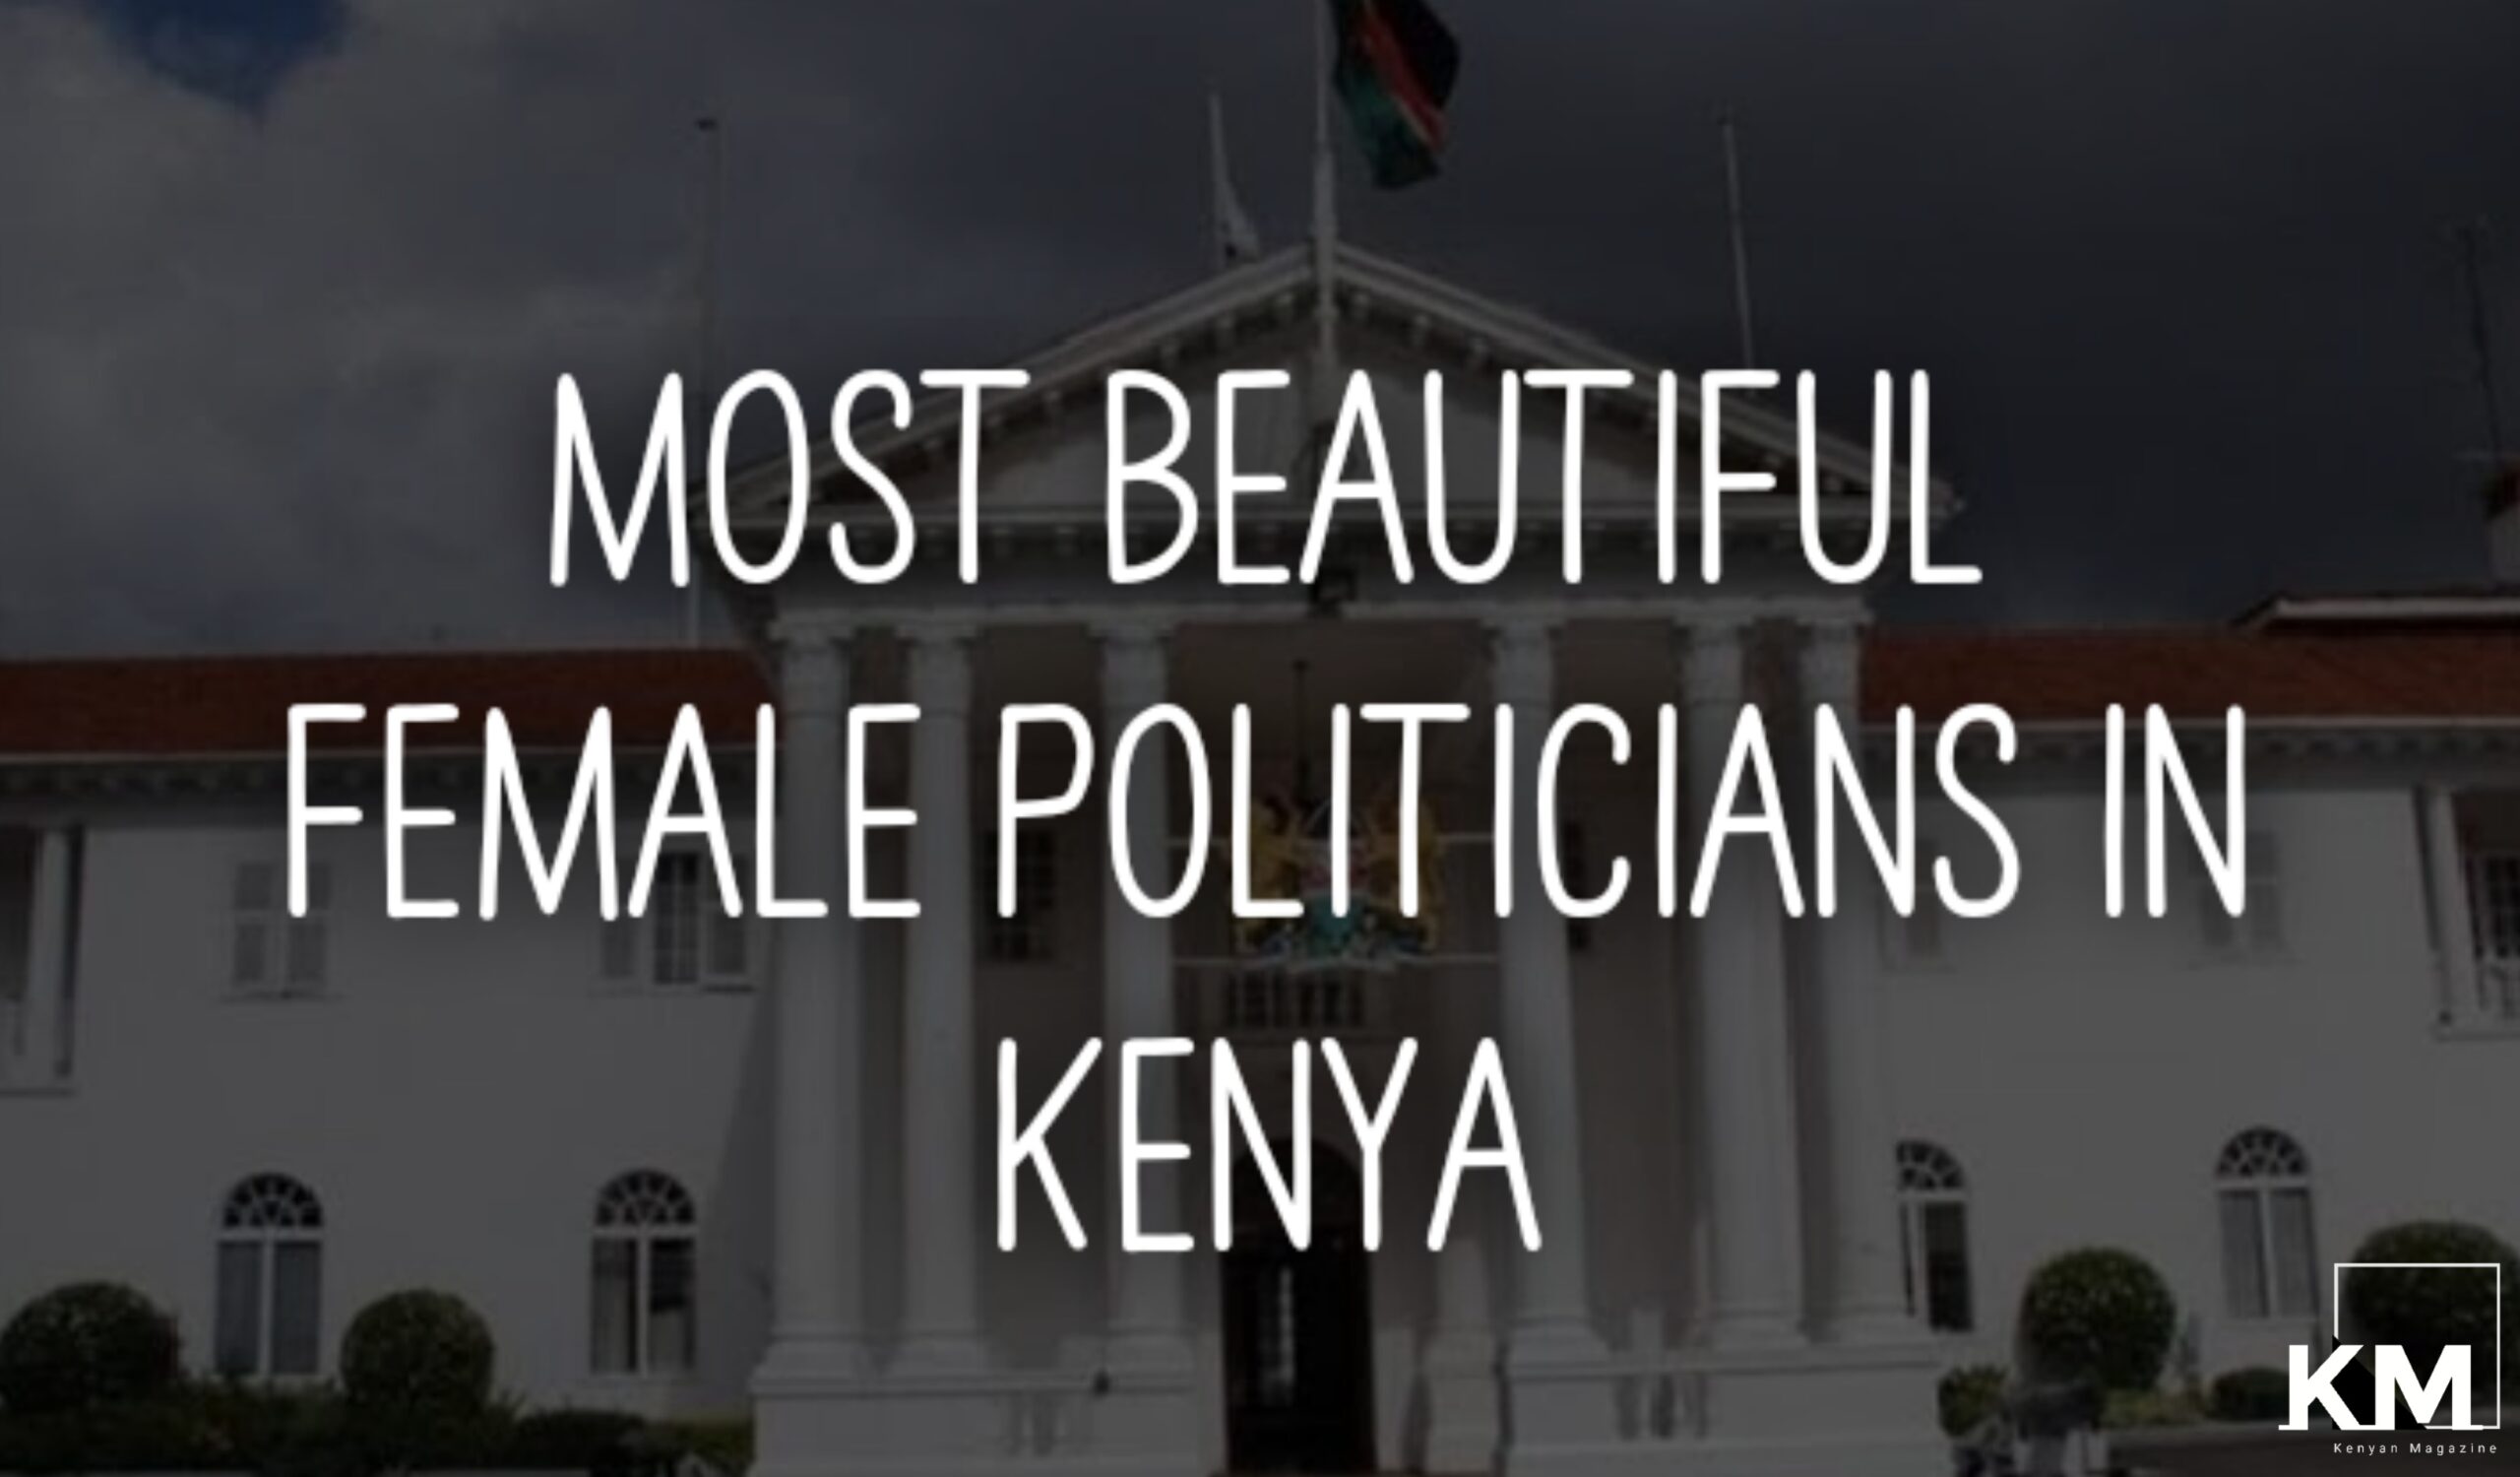 Most beautiful female politicians in Kenya